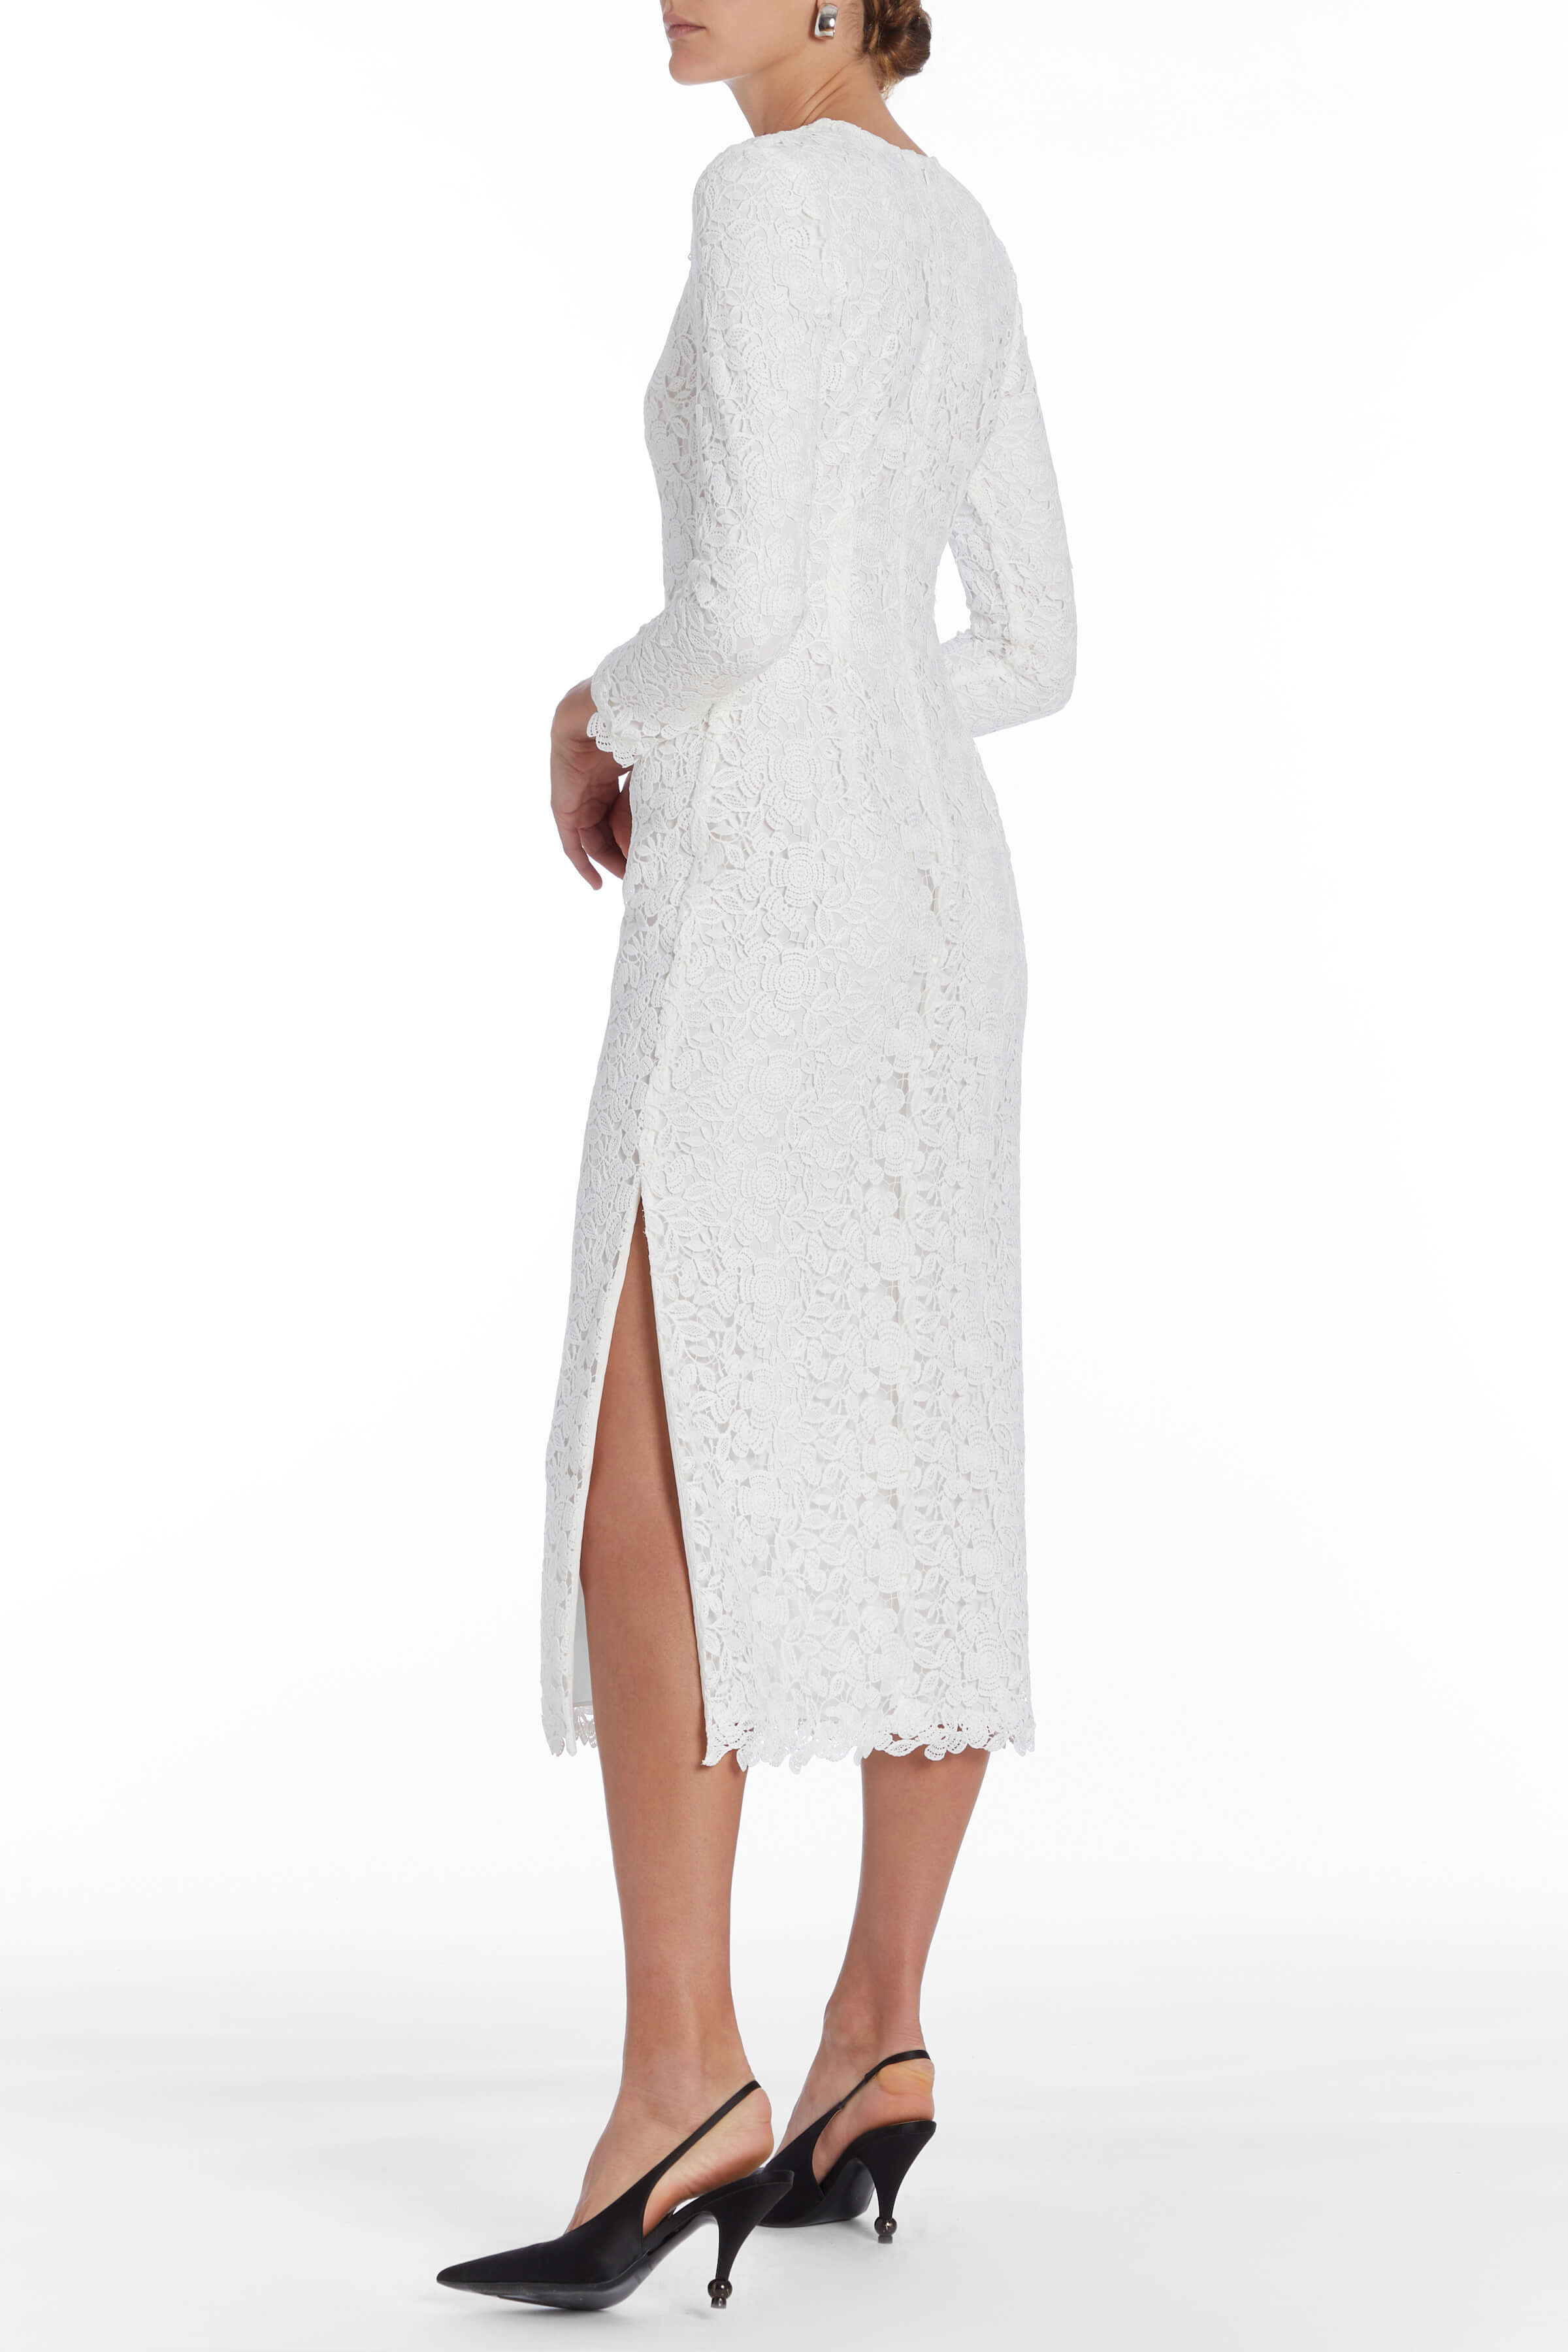 New Look crochet midi dress in off white